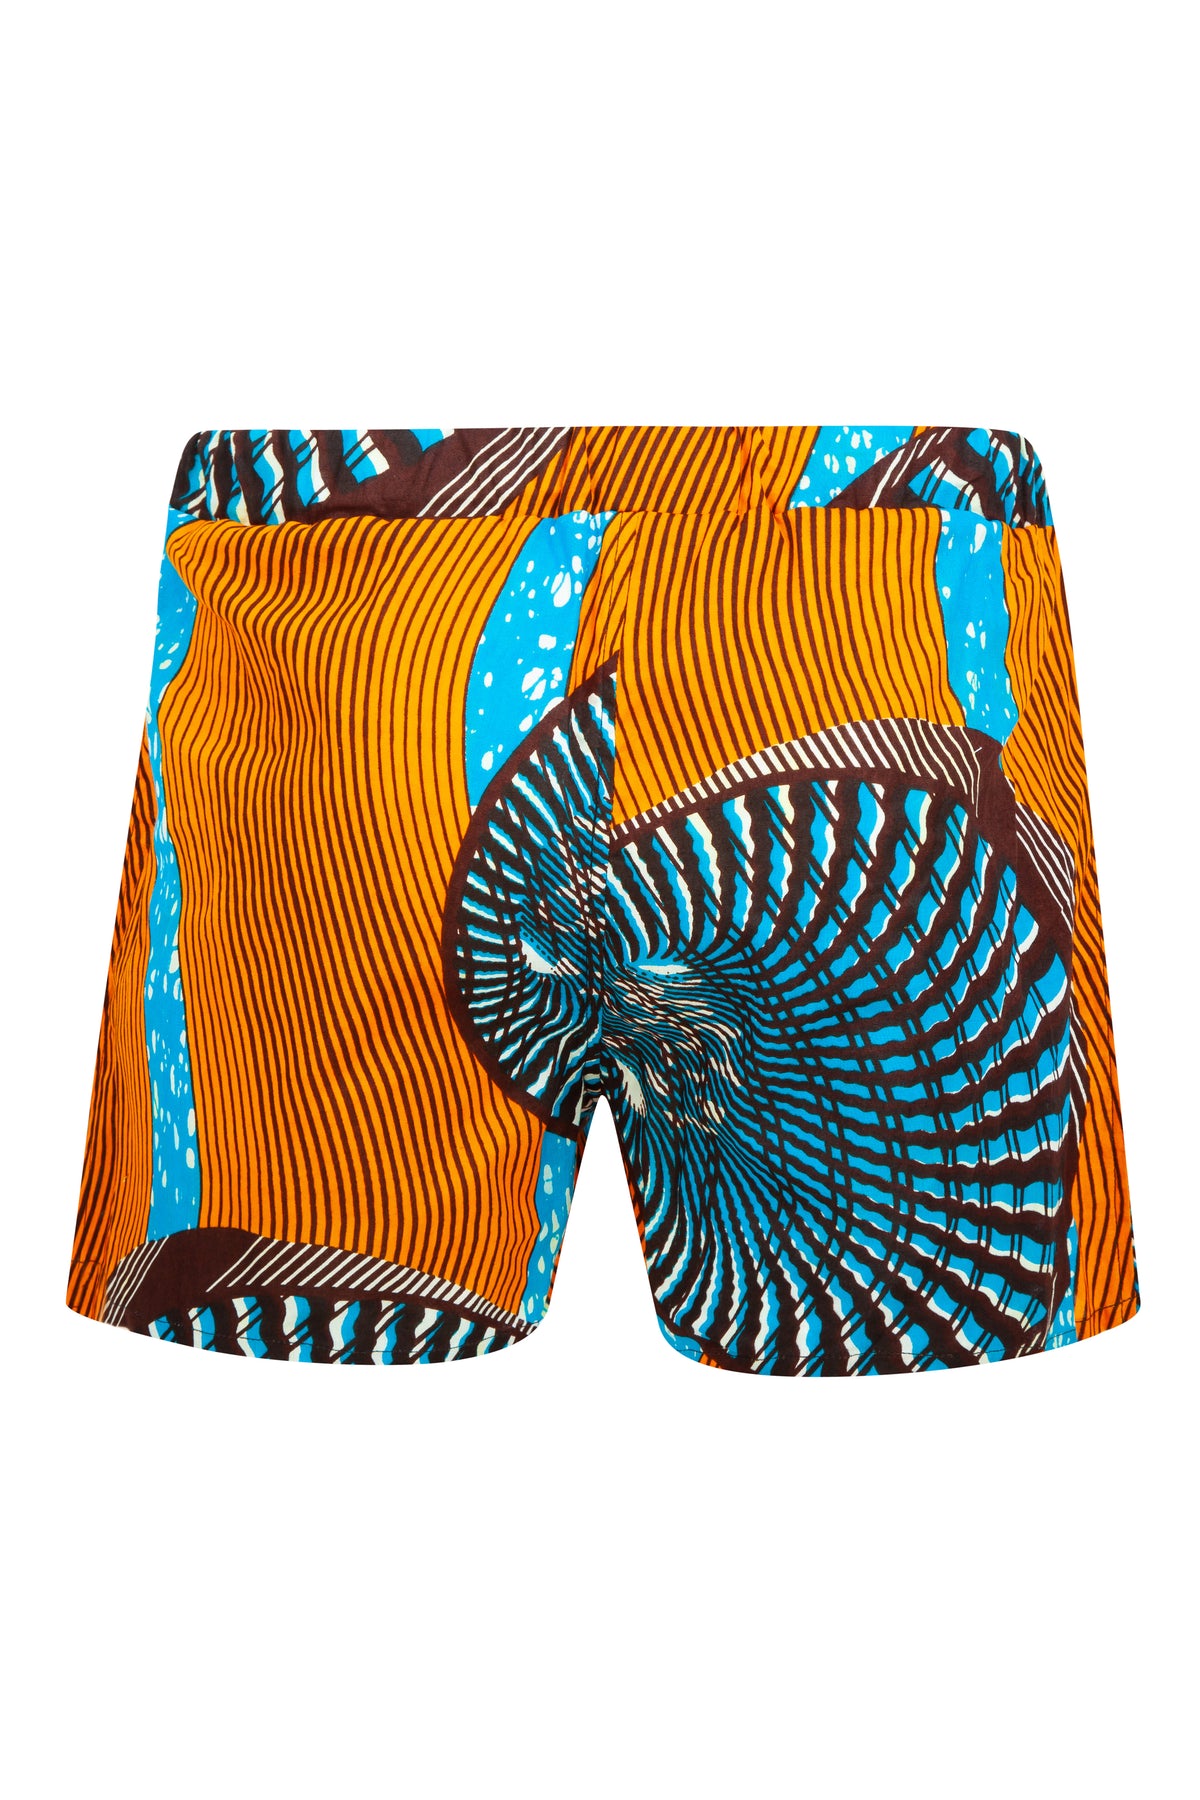 African Print Boxer Shorts-Orange - OHEMA OHENE AFRICAN INSPIRED FASHION